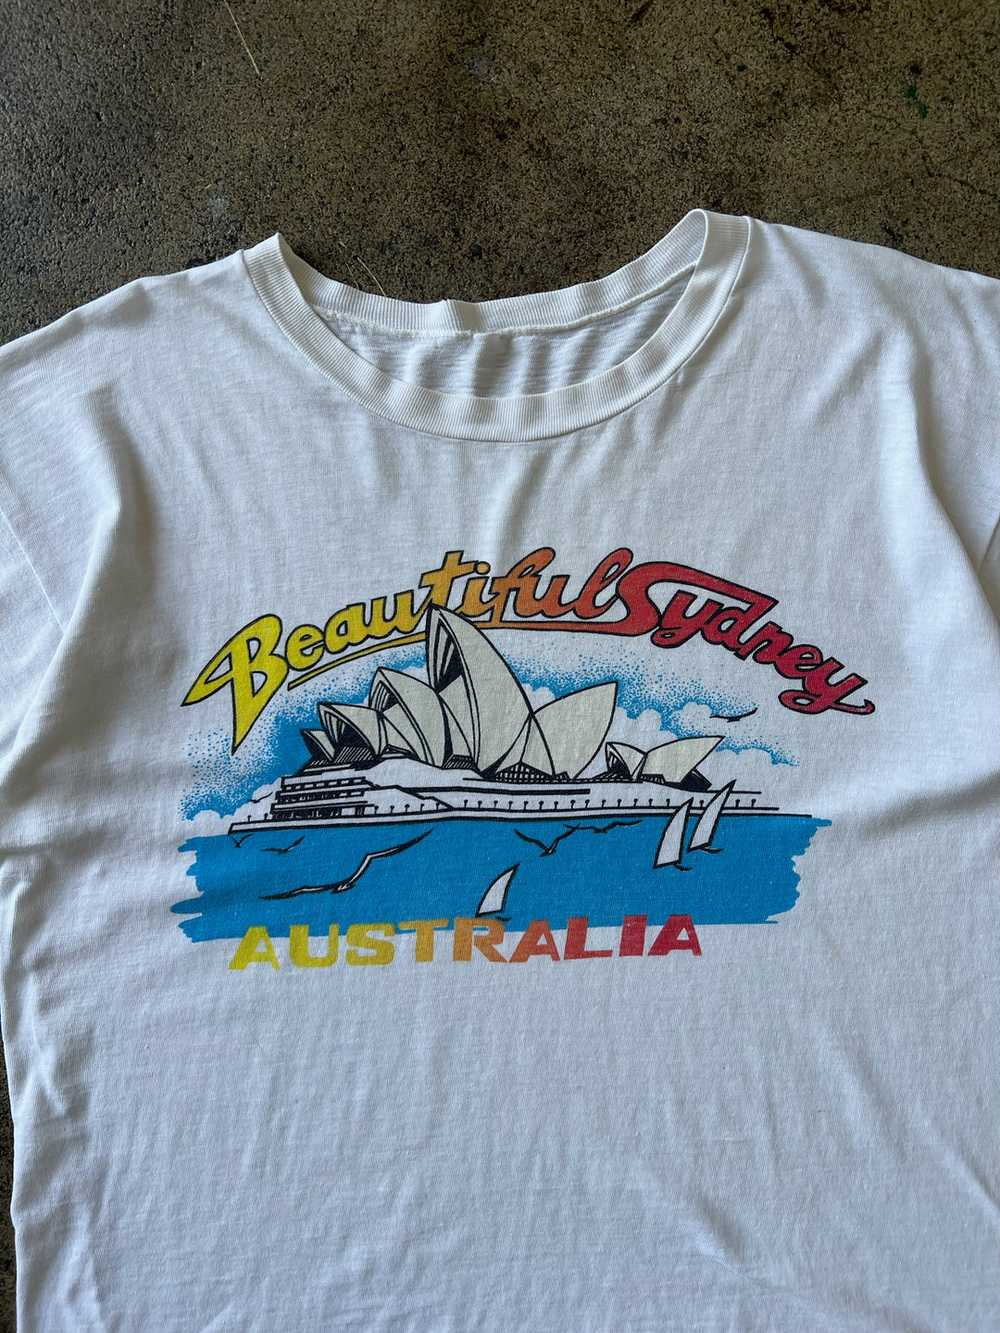 1980s Sydney Australia Boxy Tee - image 2